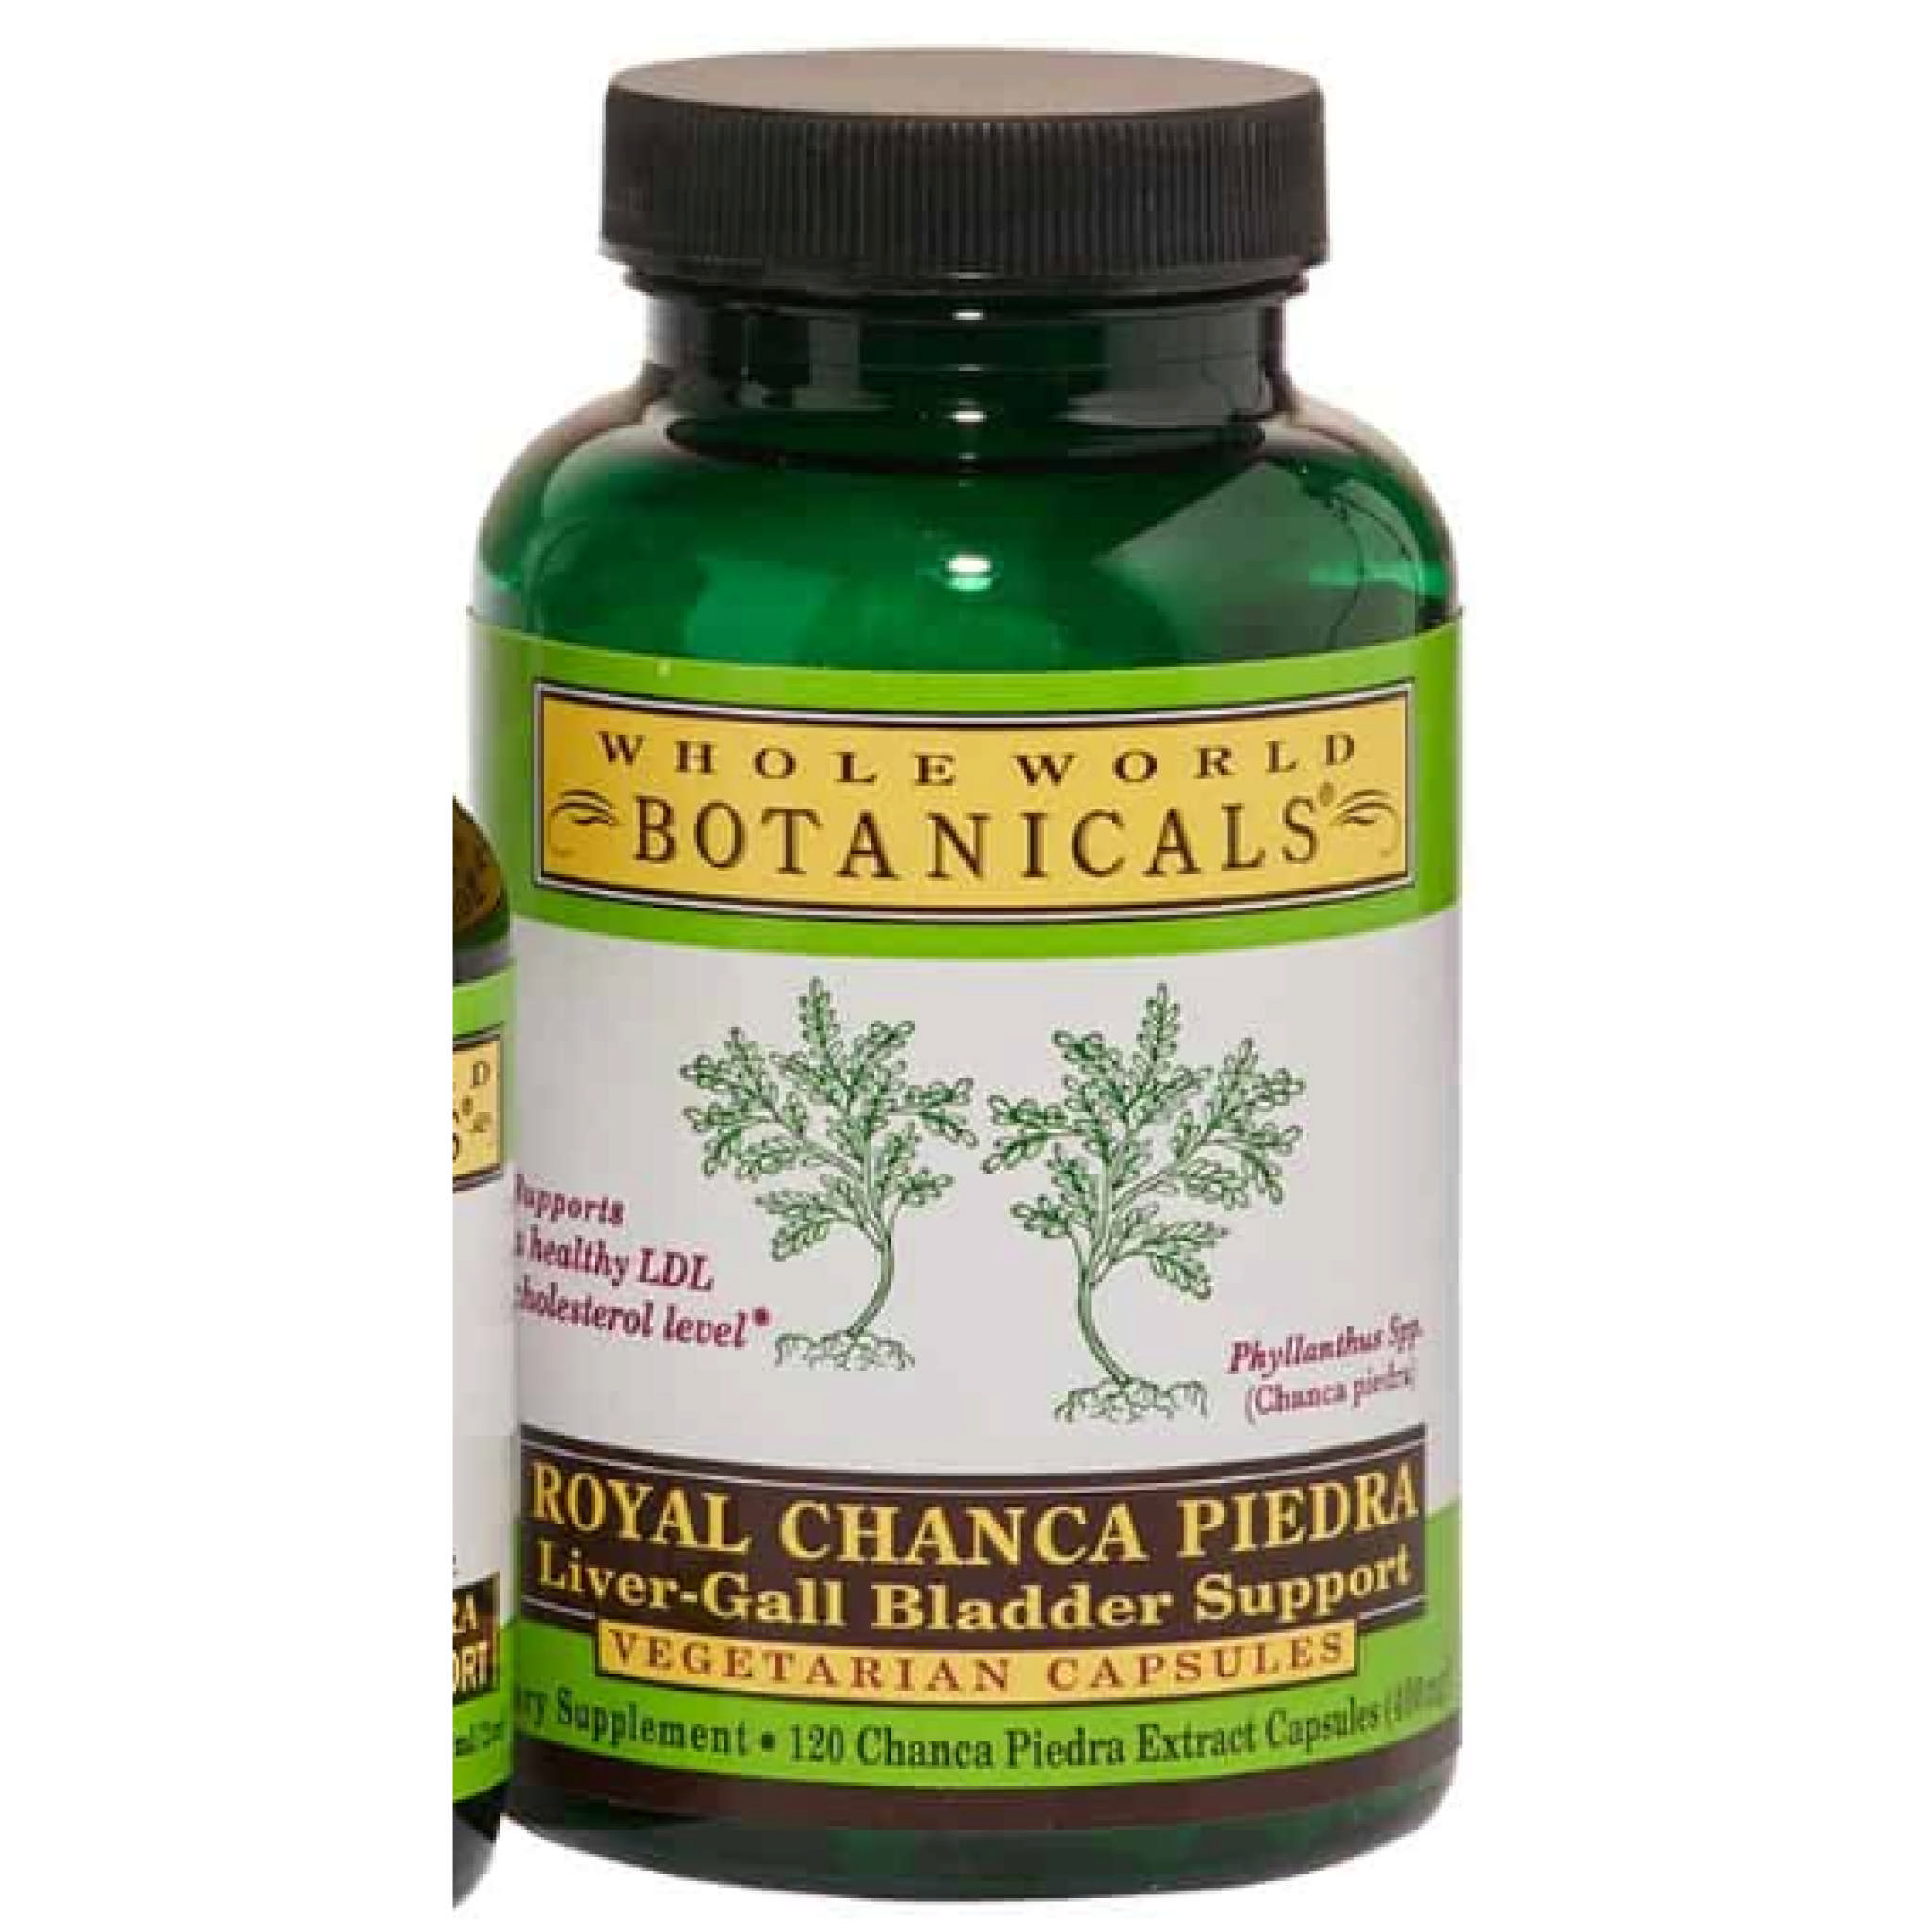 Whole World Botanicals - Royal Chanca Piedra Kidney